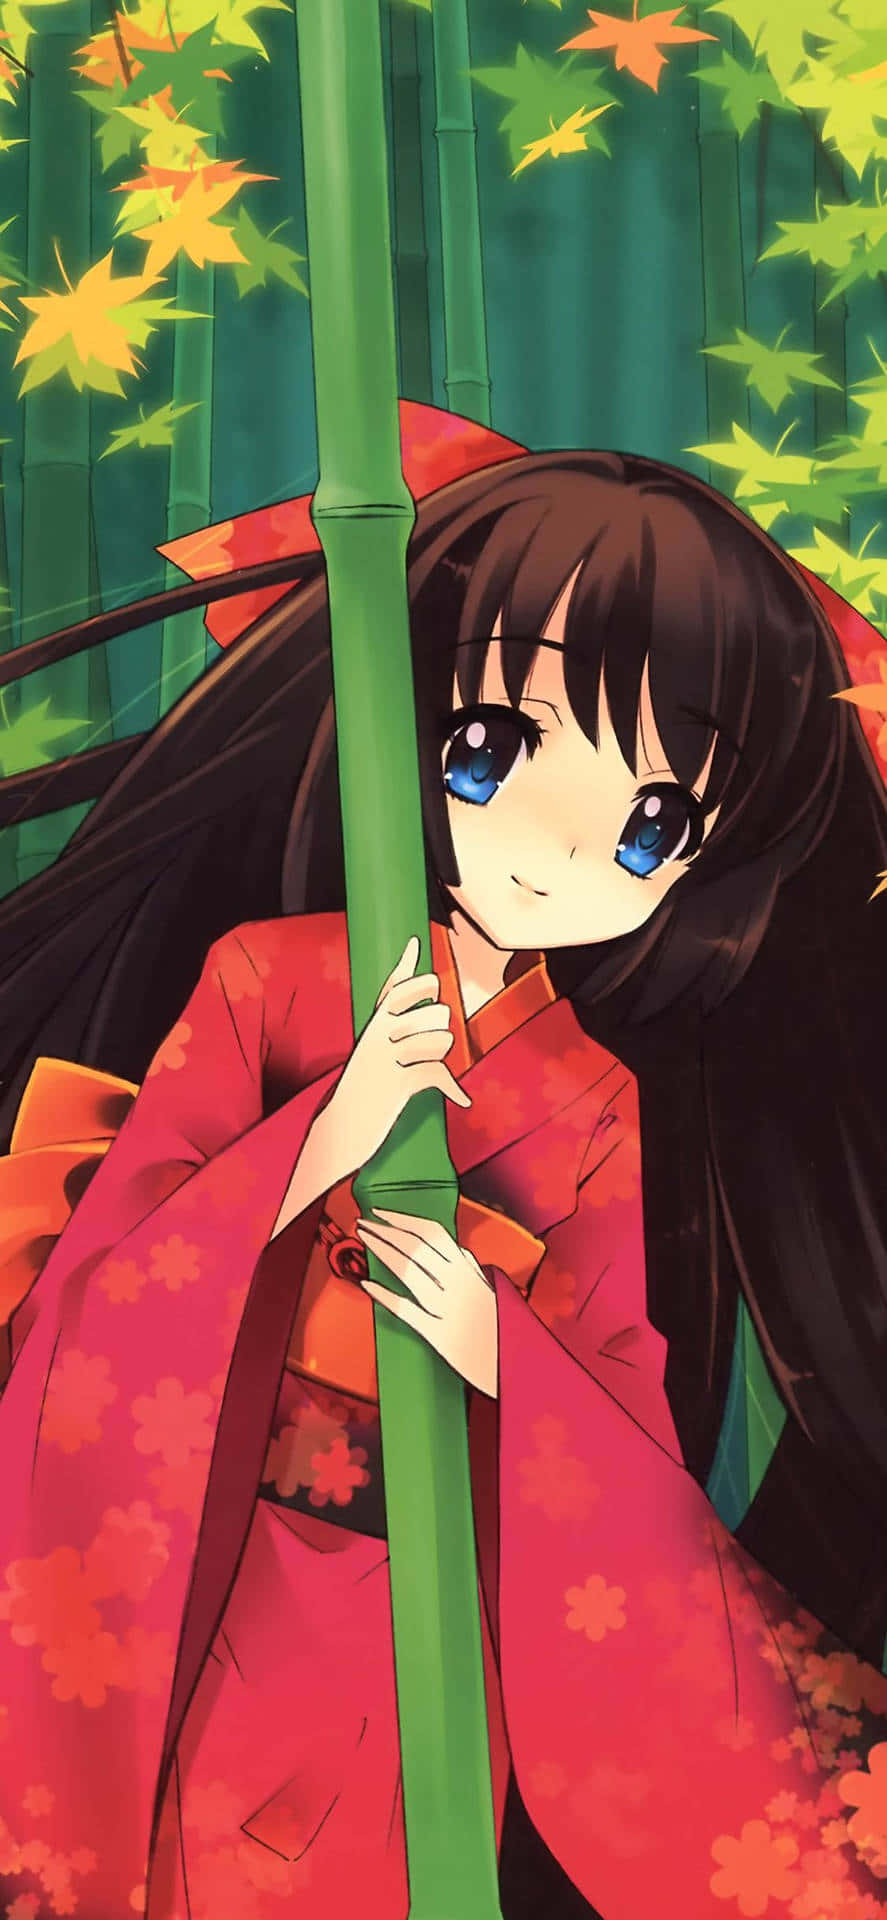 Anime Girlin Red Kimonowith Bamboo Wallpaper